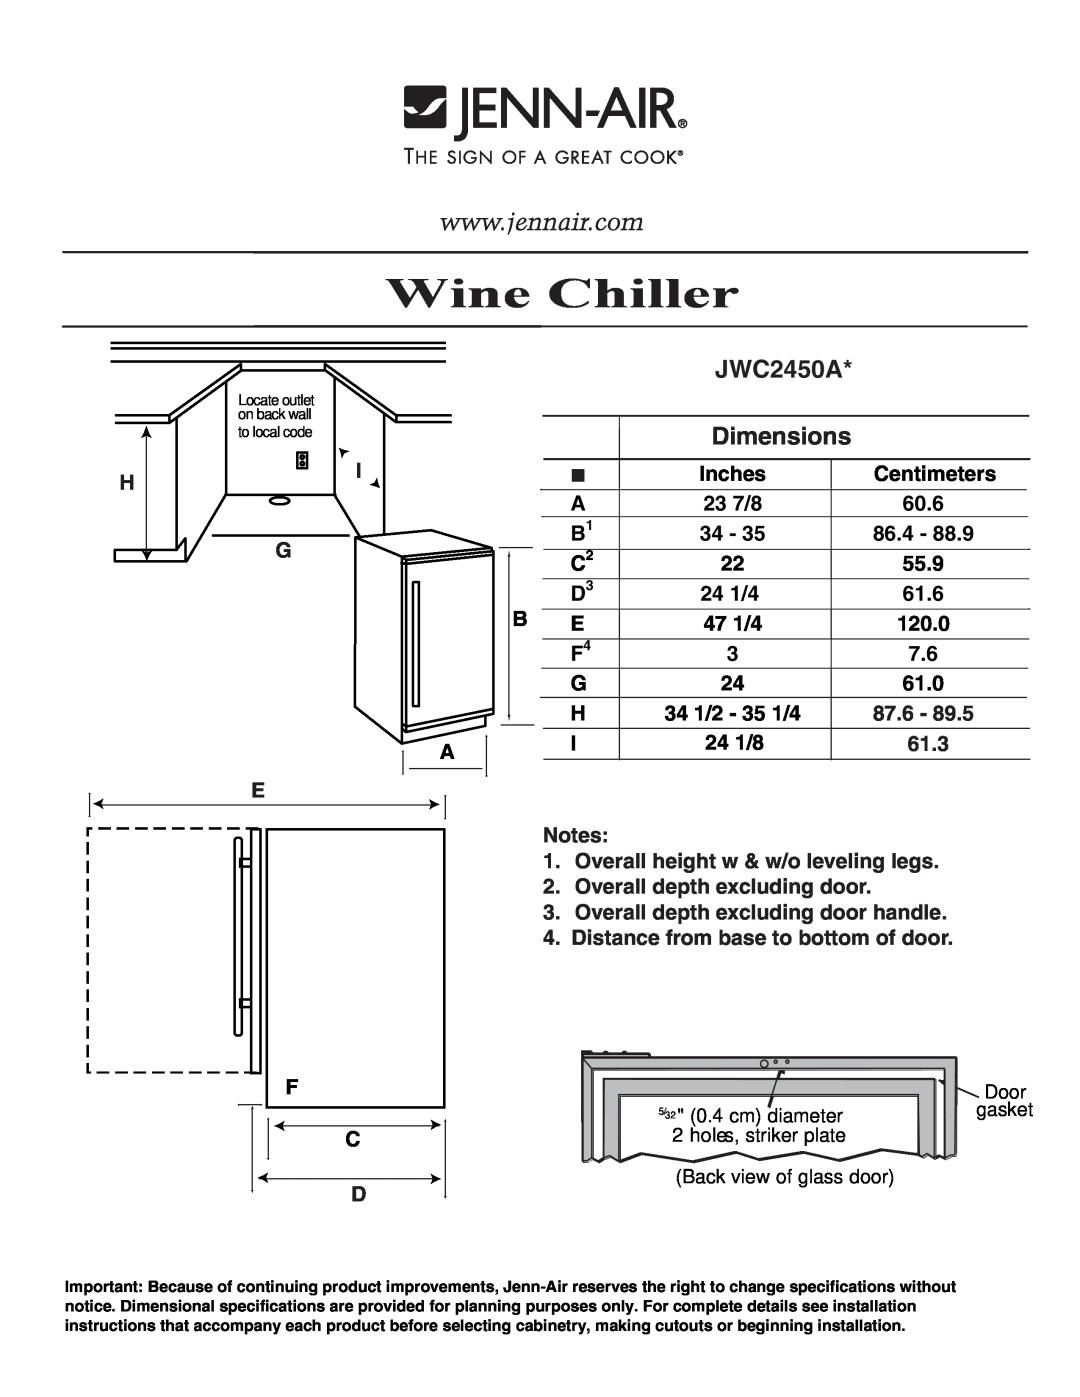 Jenn-Air JWC2450A dimensions Wine Chiller, Dimensions 